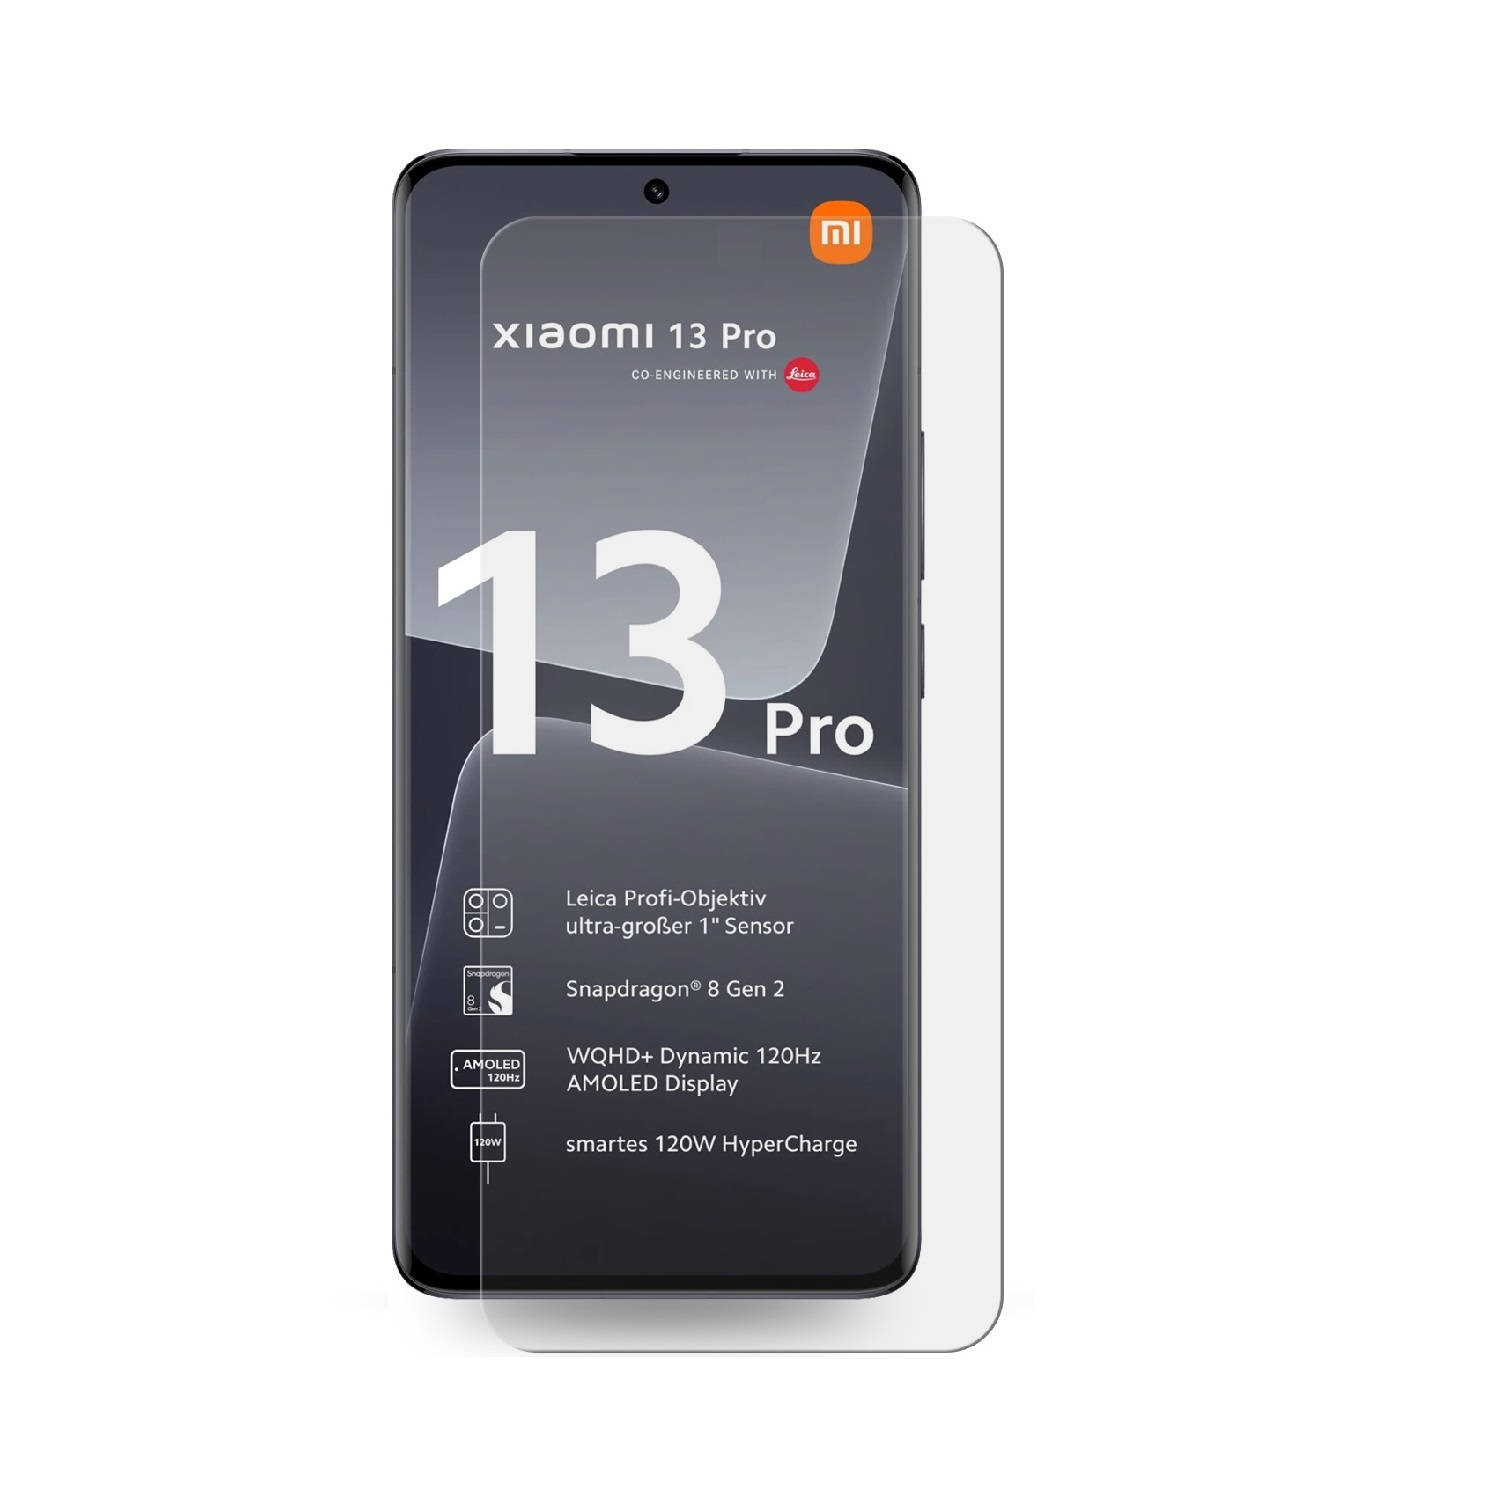 PROTECTORKING 9H UV Liquid Lite) 2x Displayschutzfolie(für Panzerglas Xiaomi HD KLAR 13